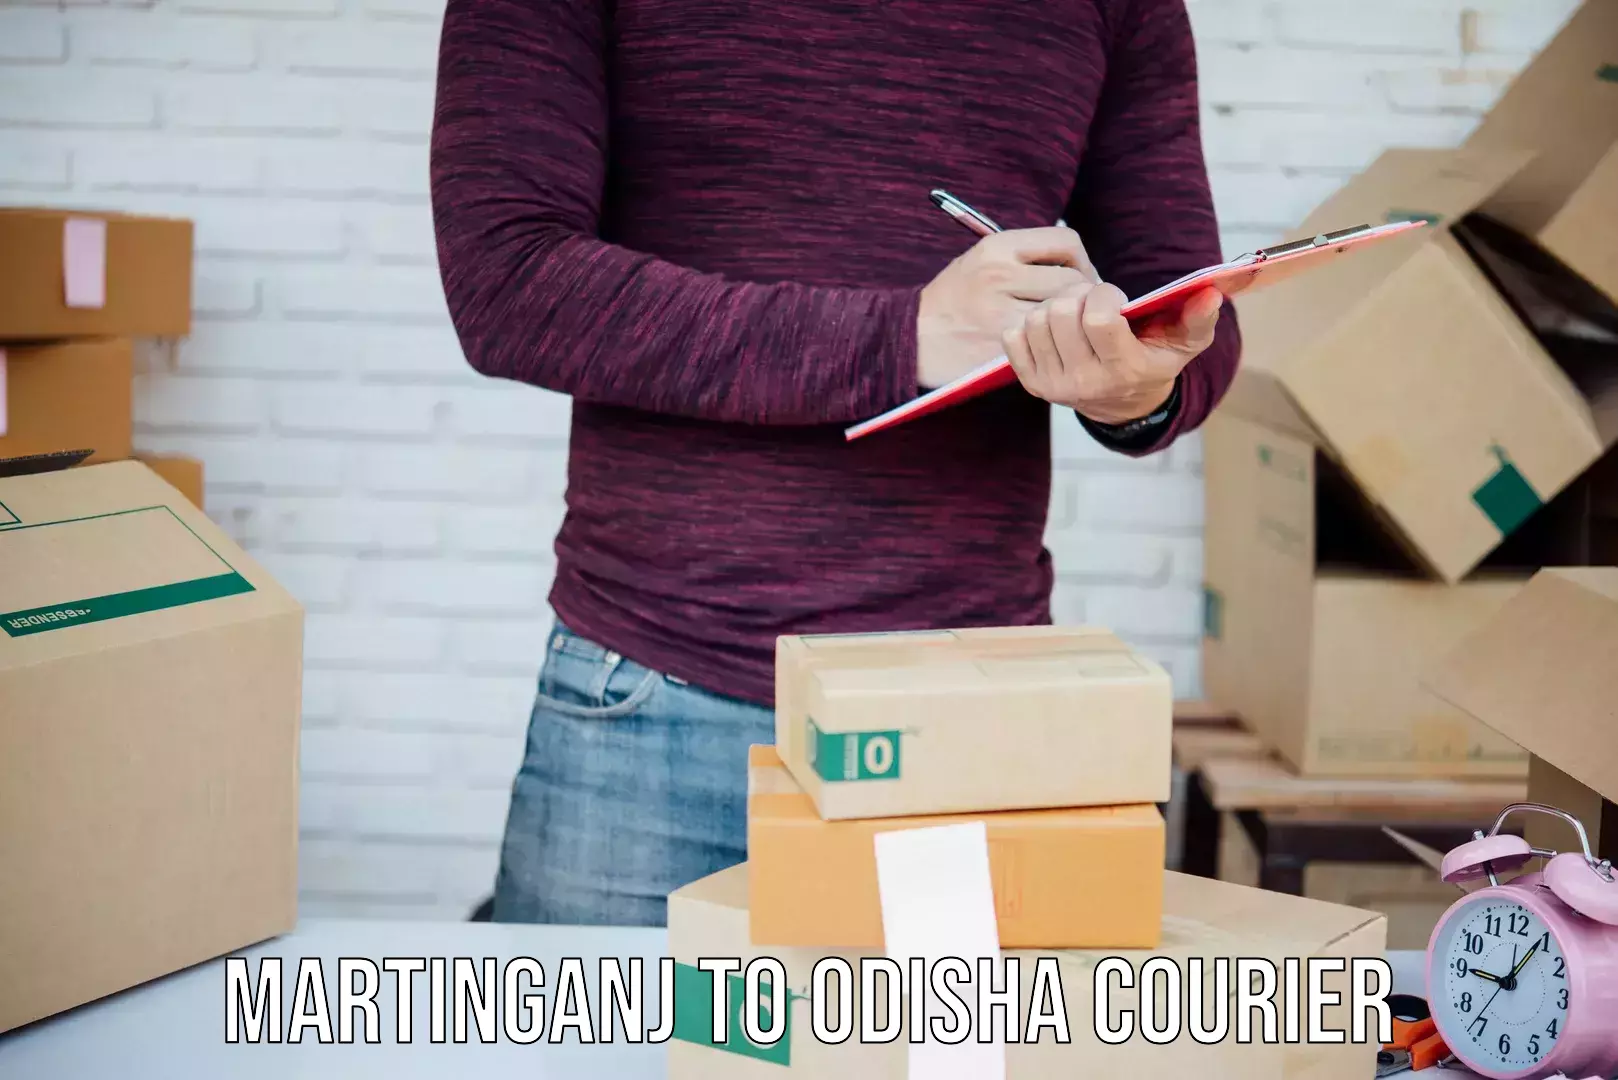 On-demand shipping options Martinganj to Jharsuguda